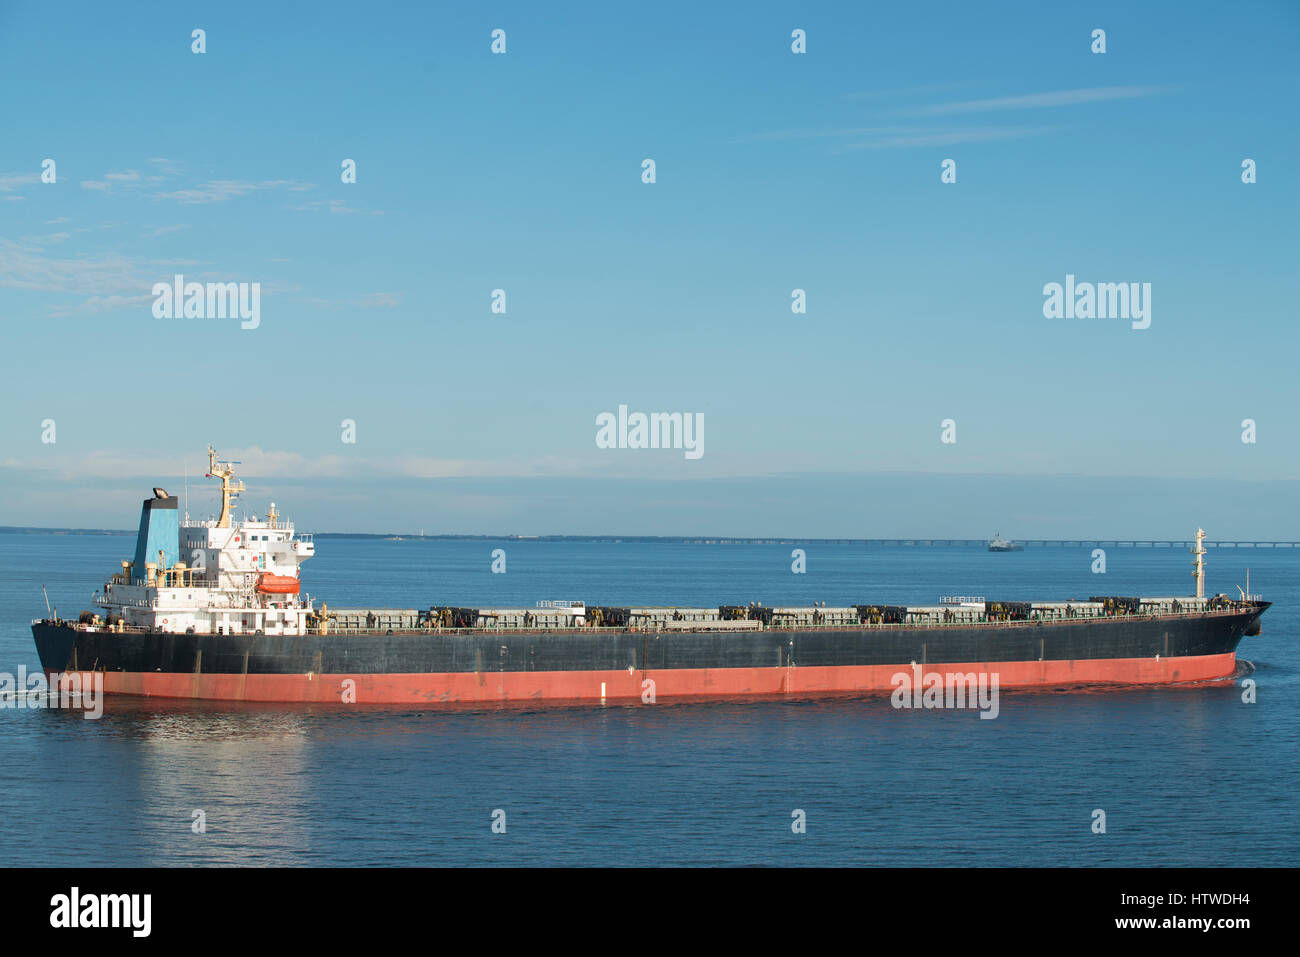 Tanker ship on the Baltic Sea Stock Photo